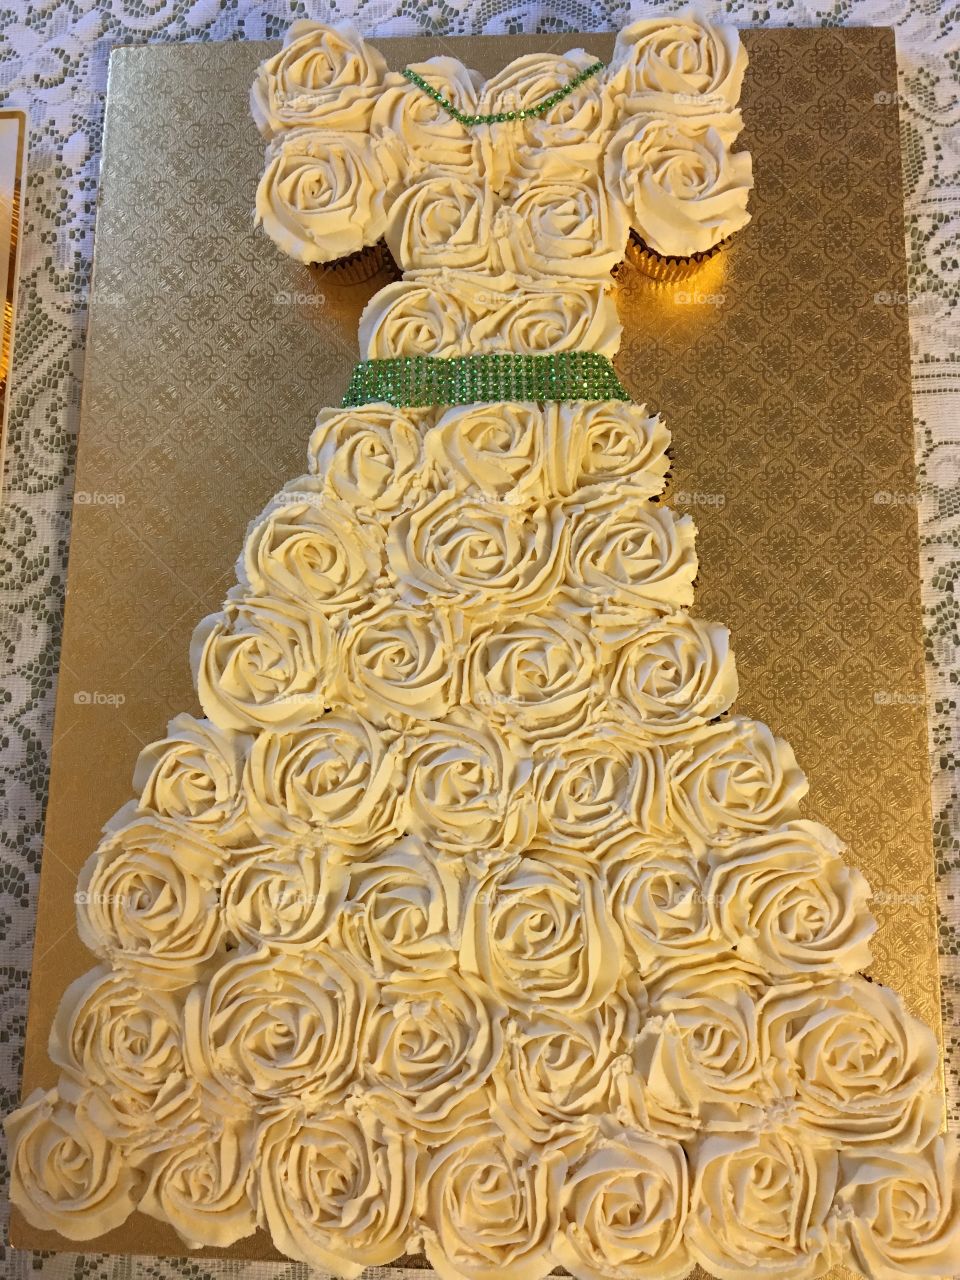 Cupcake bridal gown